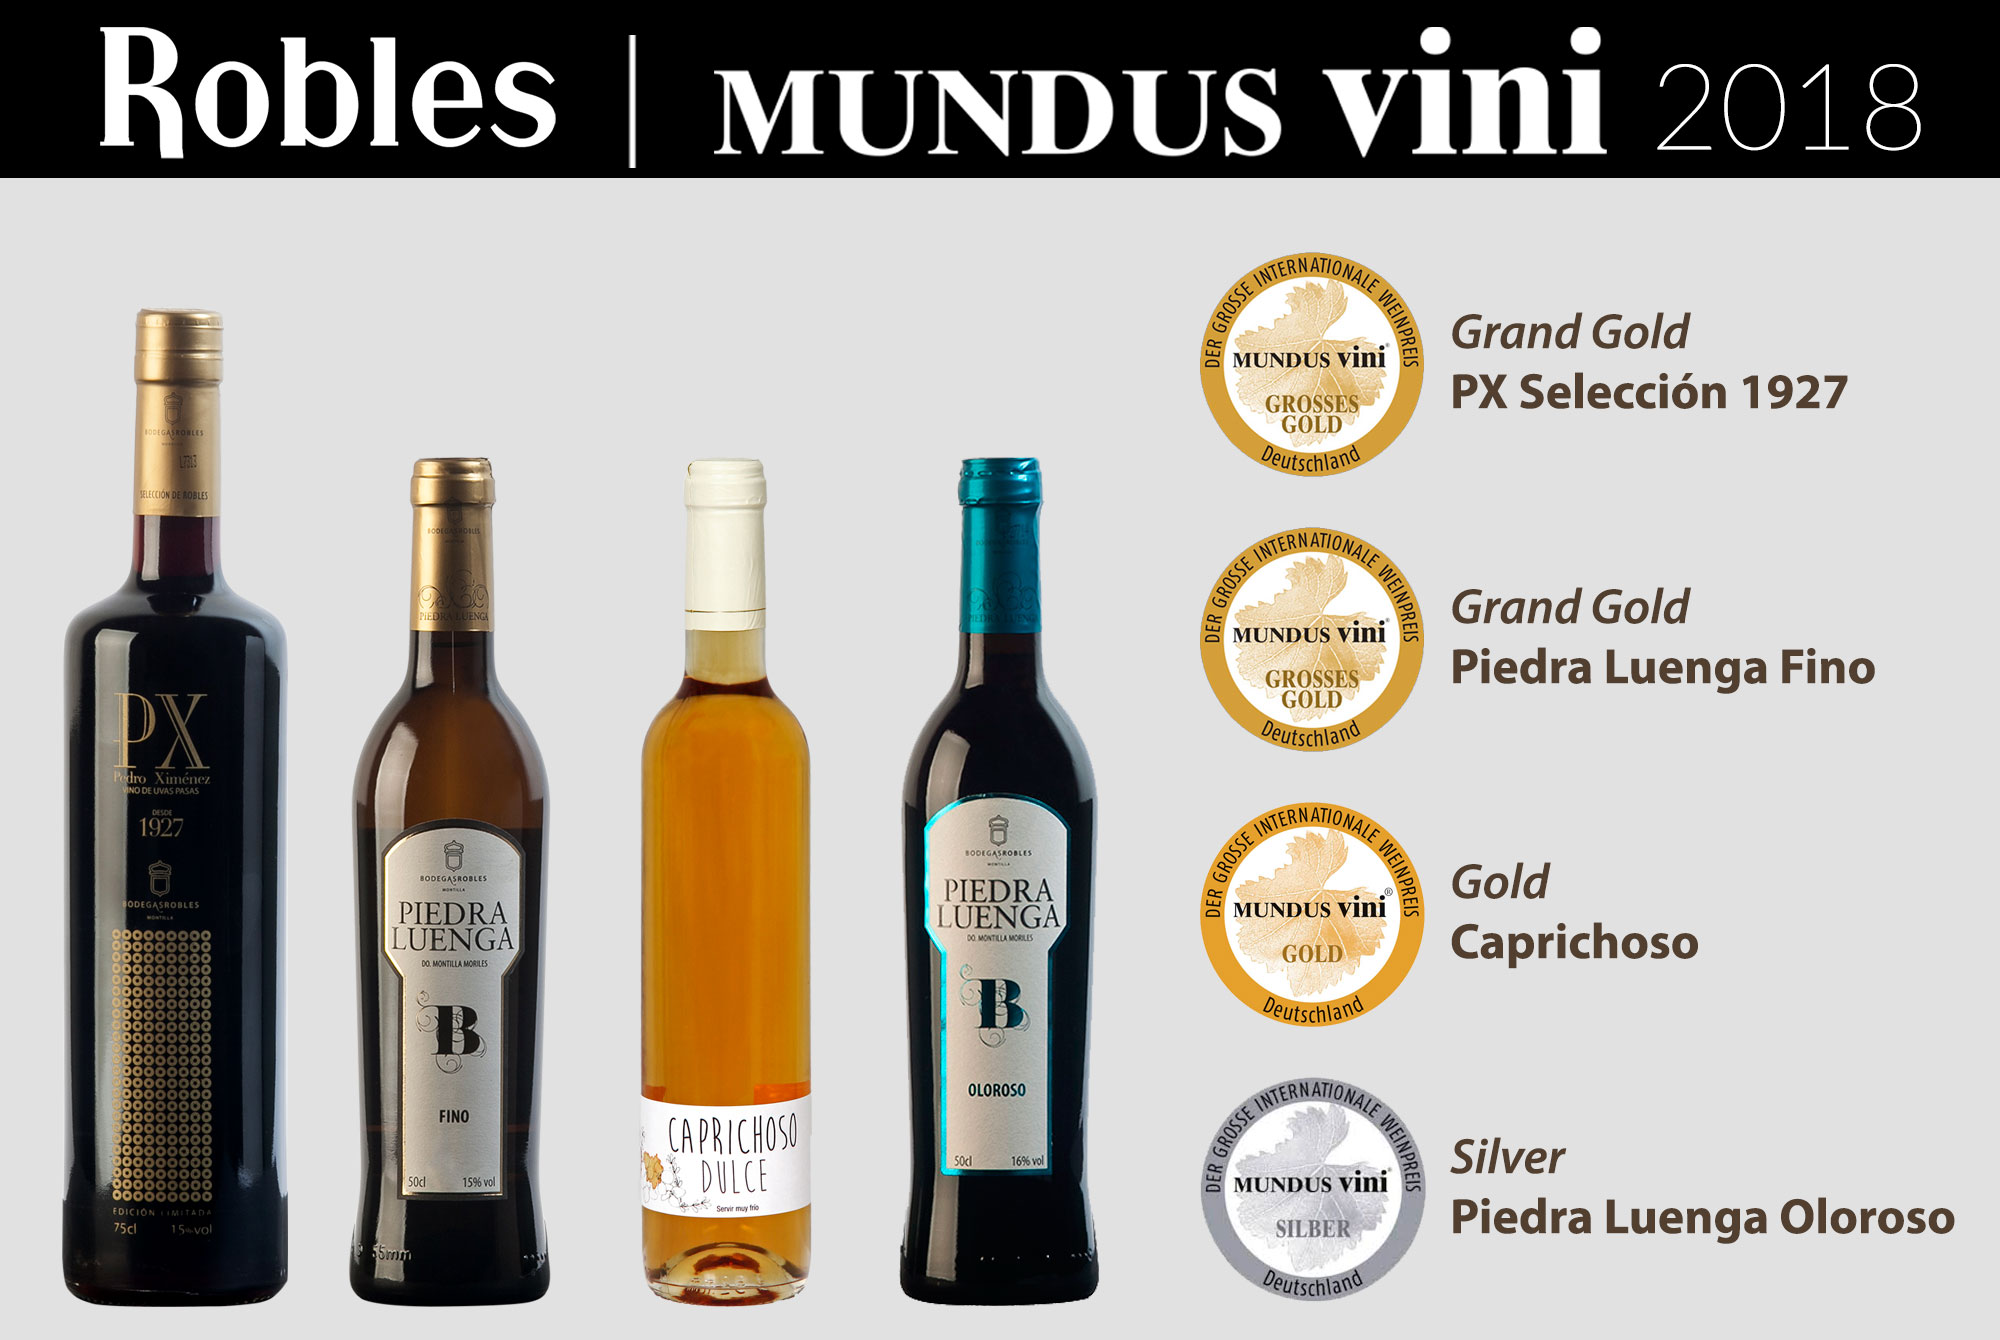 Bodegas Robles awarded in Mundus Vini, Germany